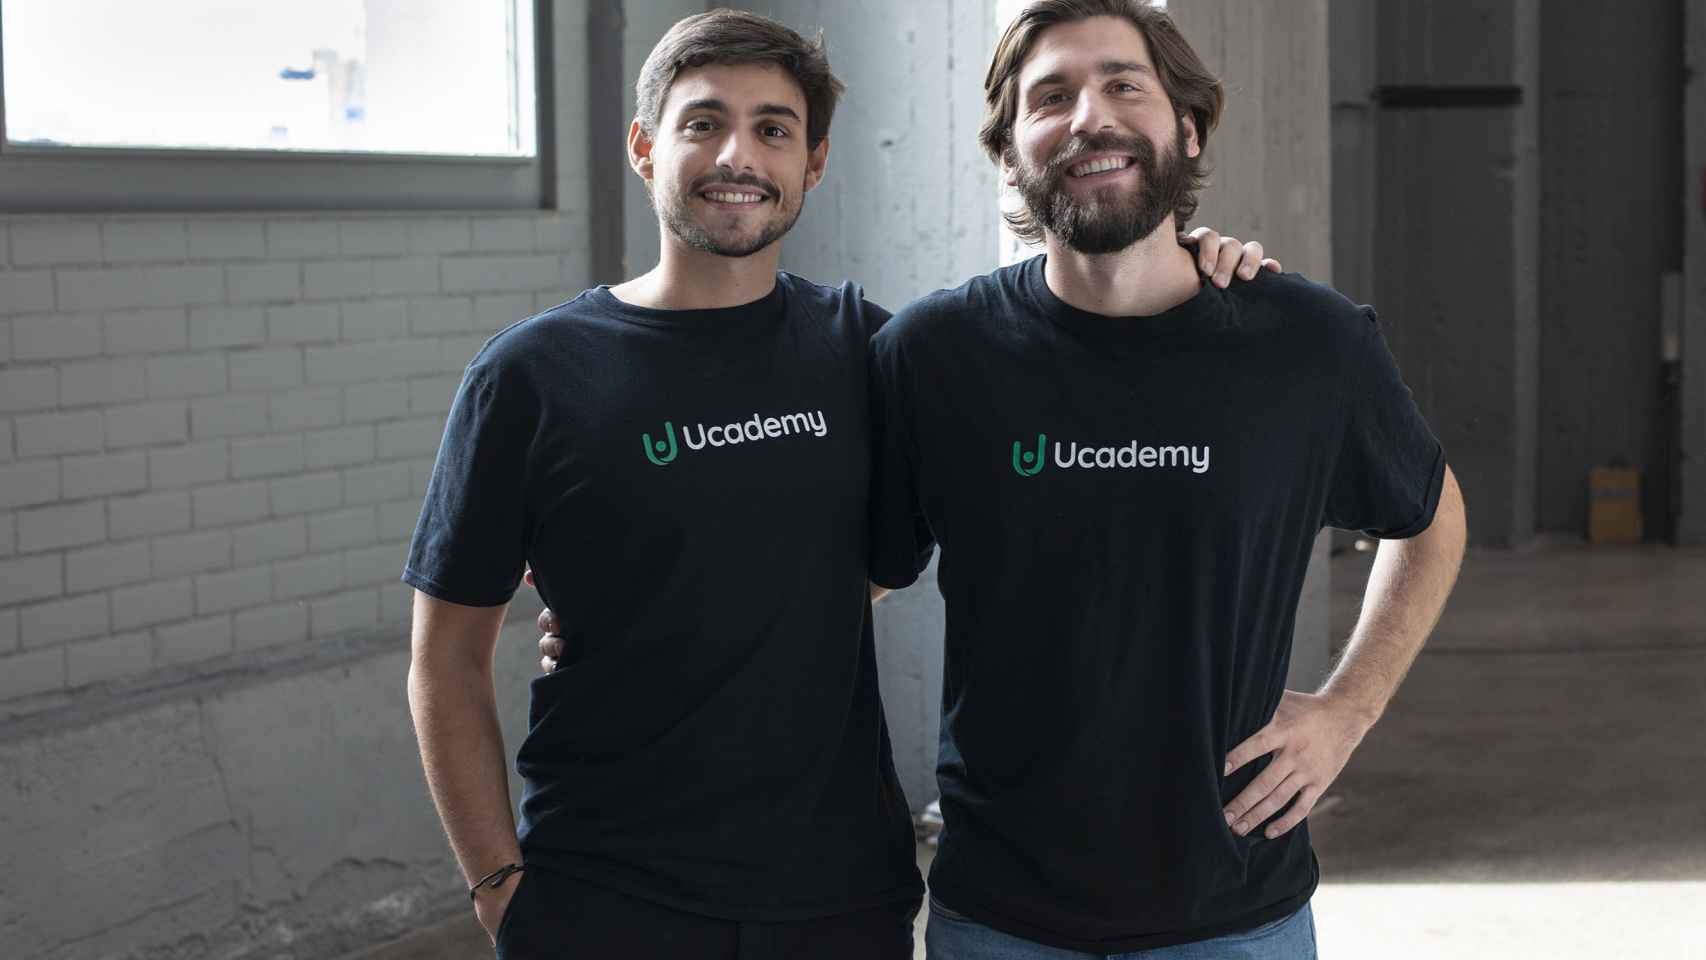 A la izquierda, Pablo Prieto, cofundador de Ucademy. A la derecha Ramiro Zandrino, CEO y cofundador de la start-up.